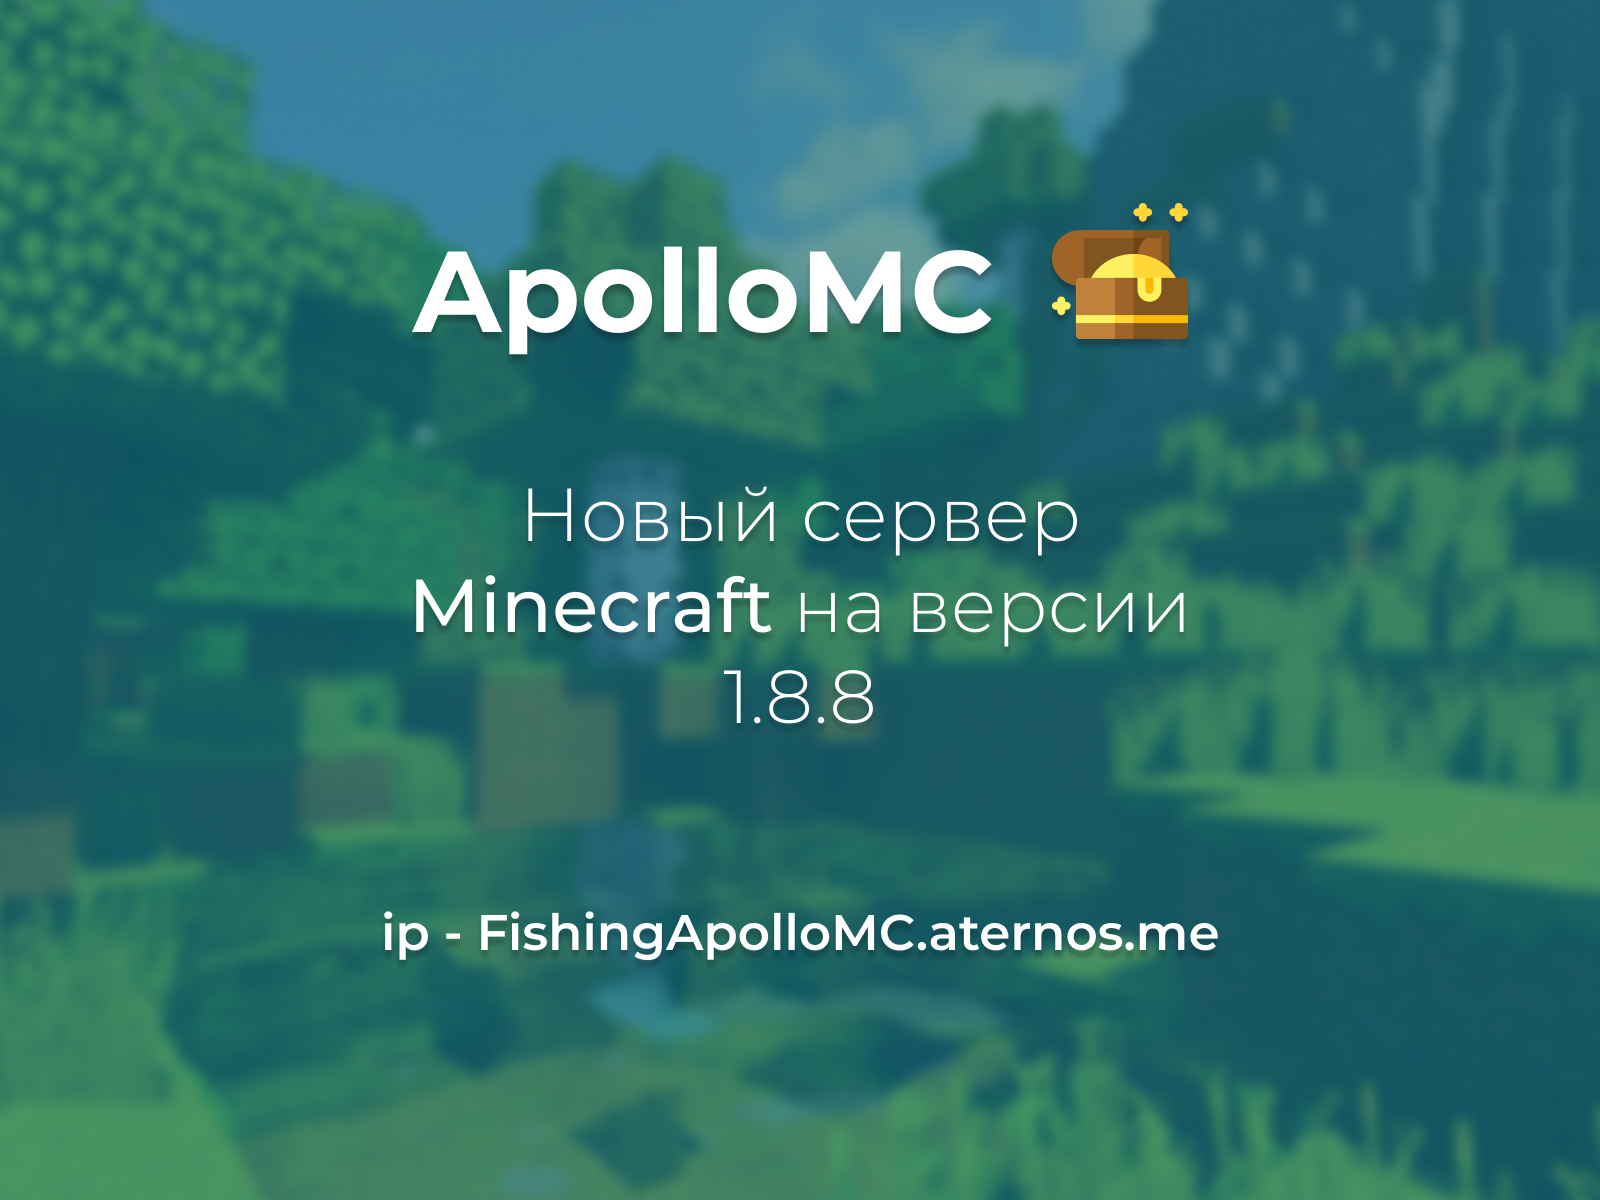 Apollo Minecraft Server